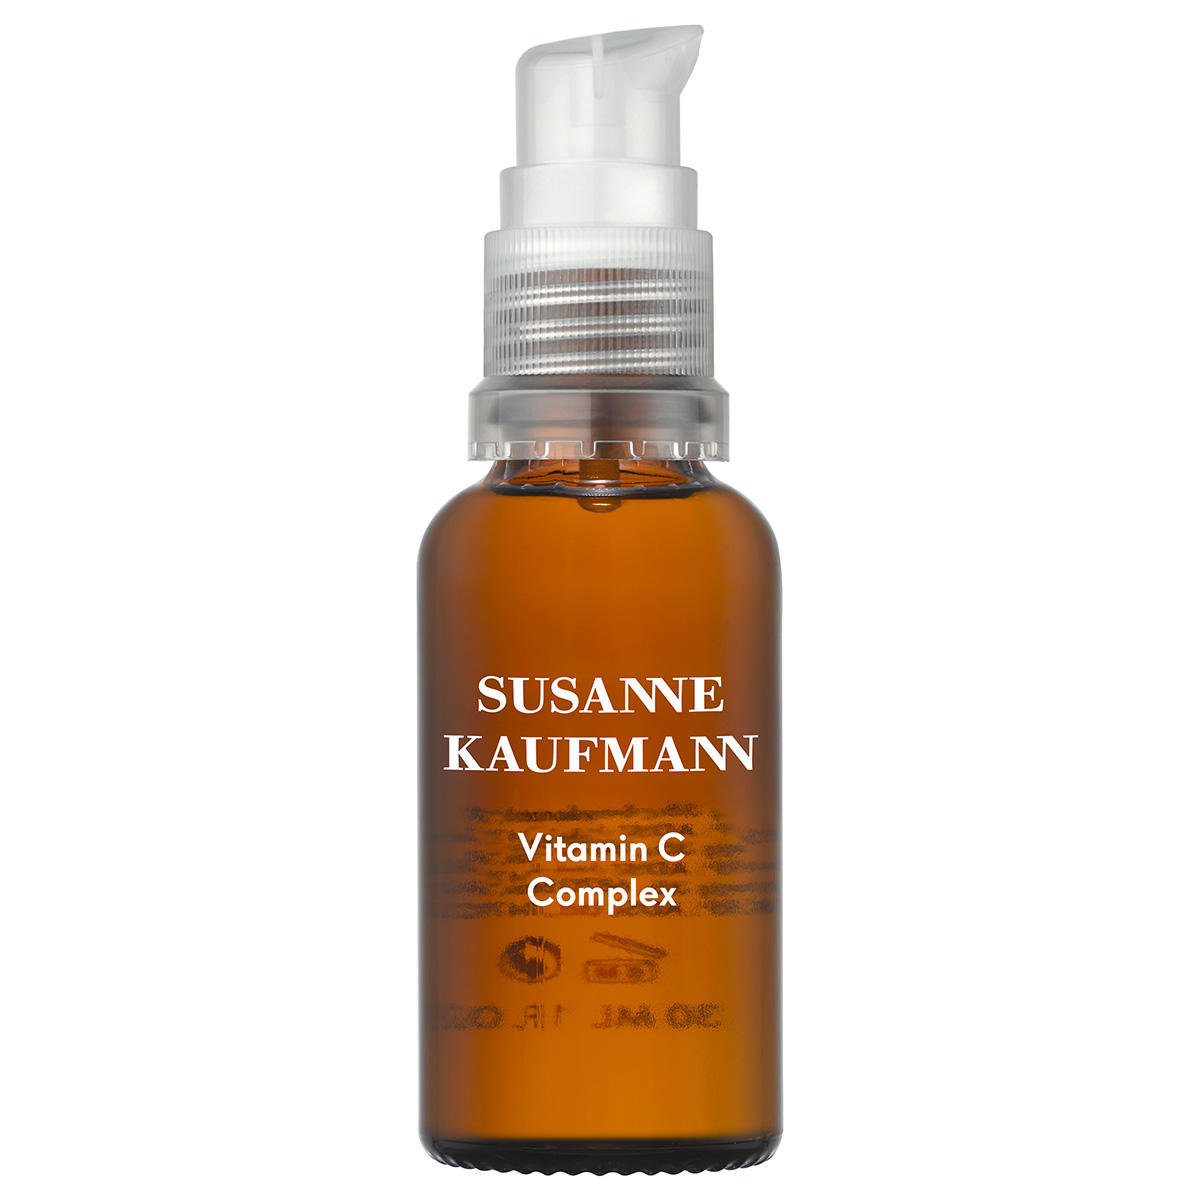 Susanne Kaufmann Vitamin C Complex 30 ml - 1